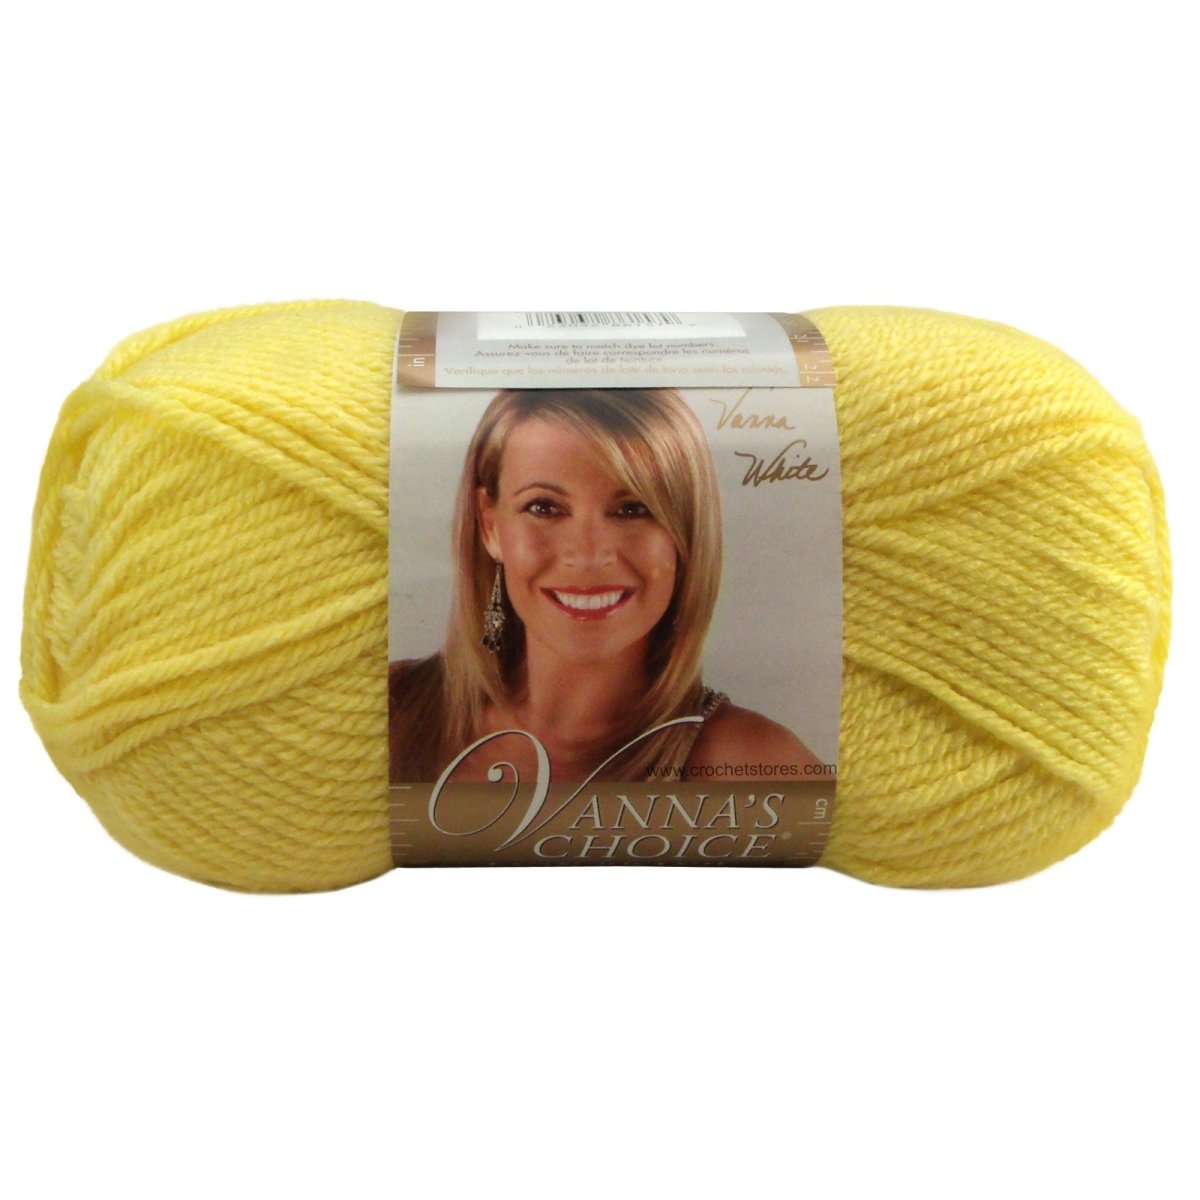 VANNAS CHOICE - Crochetstores860-158